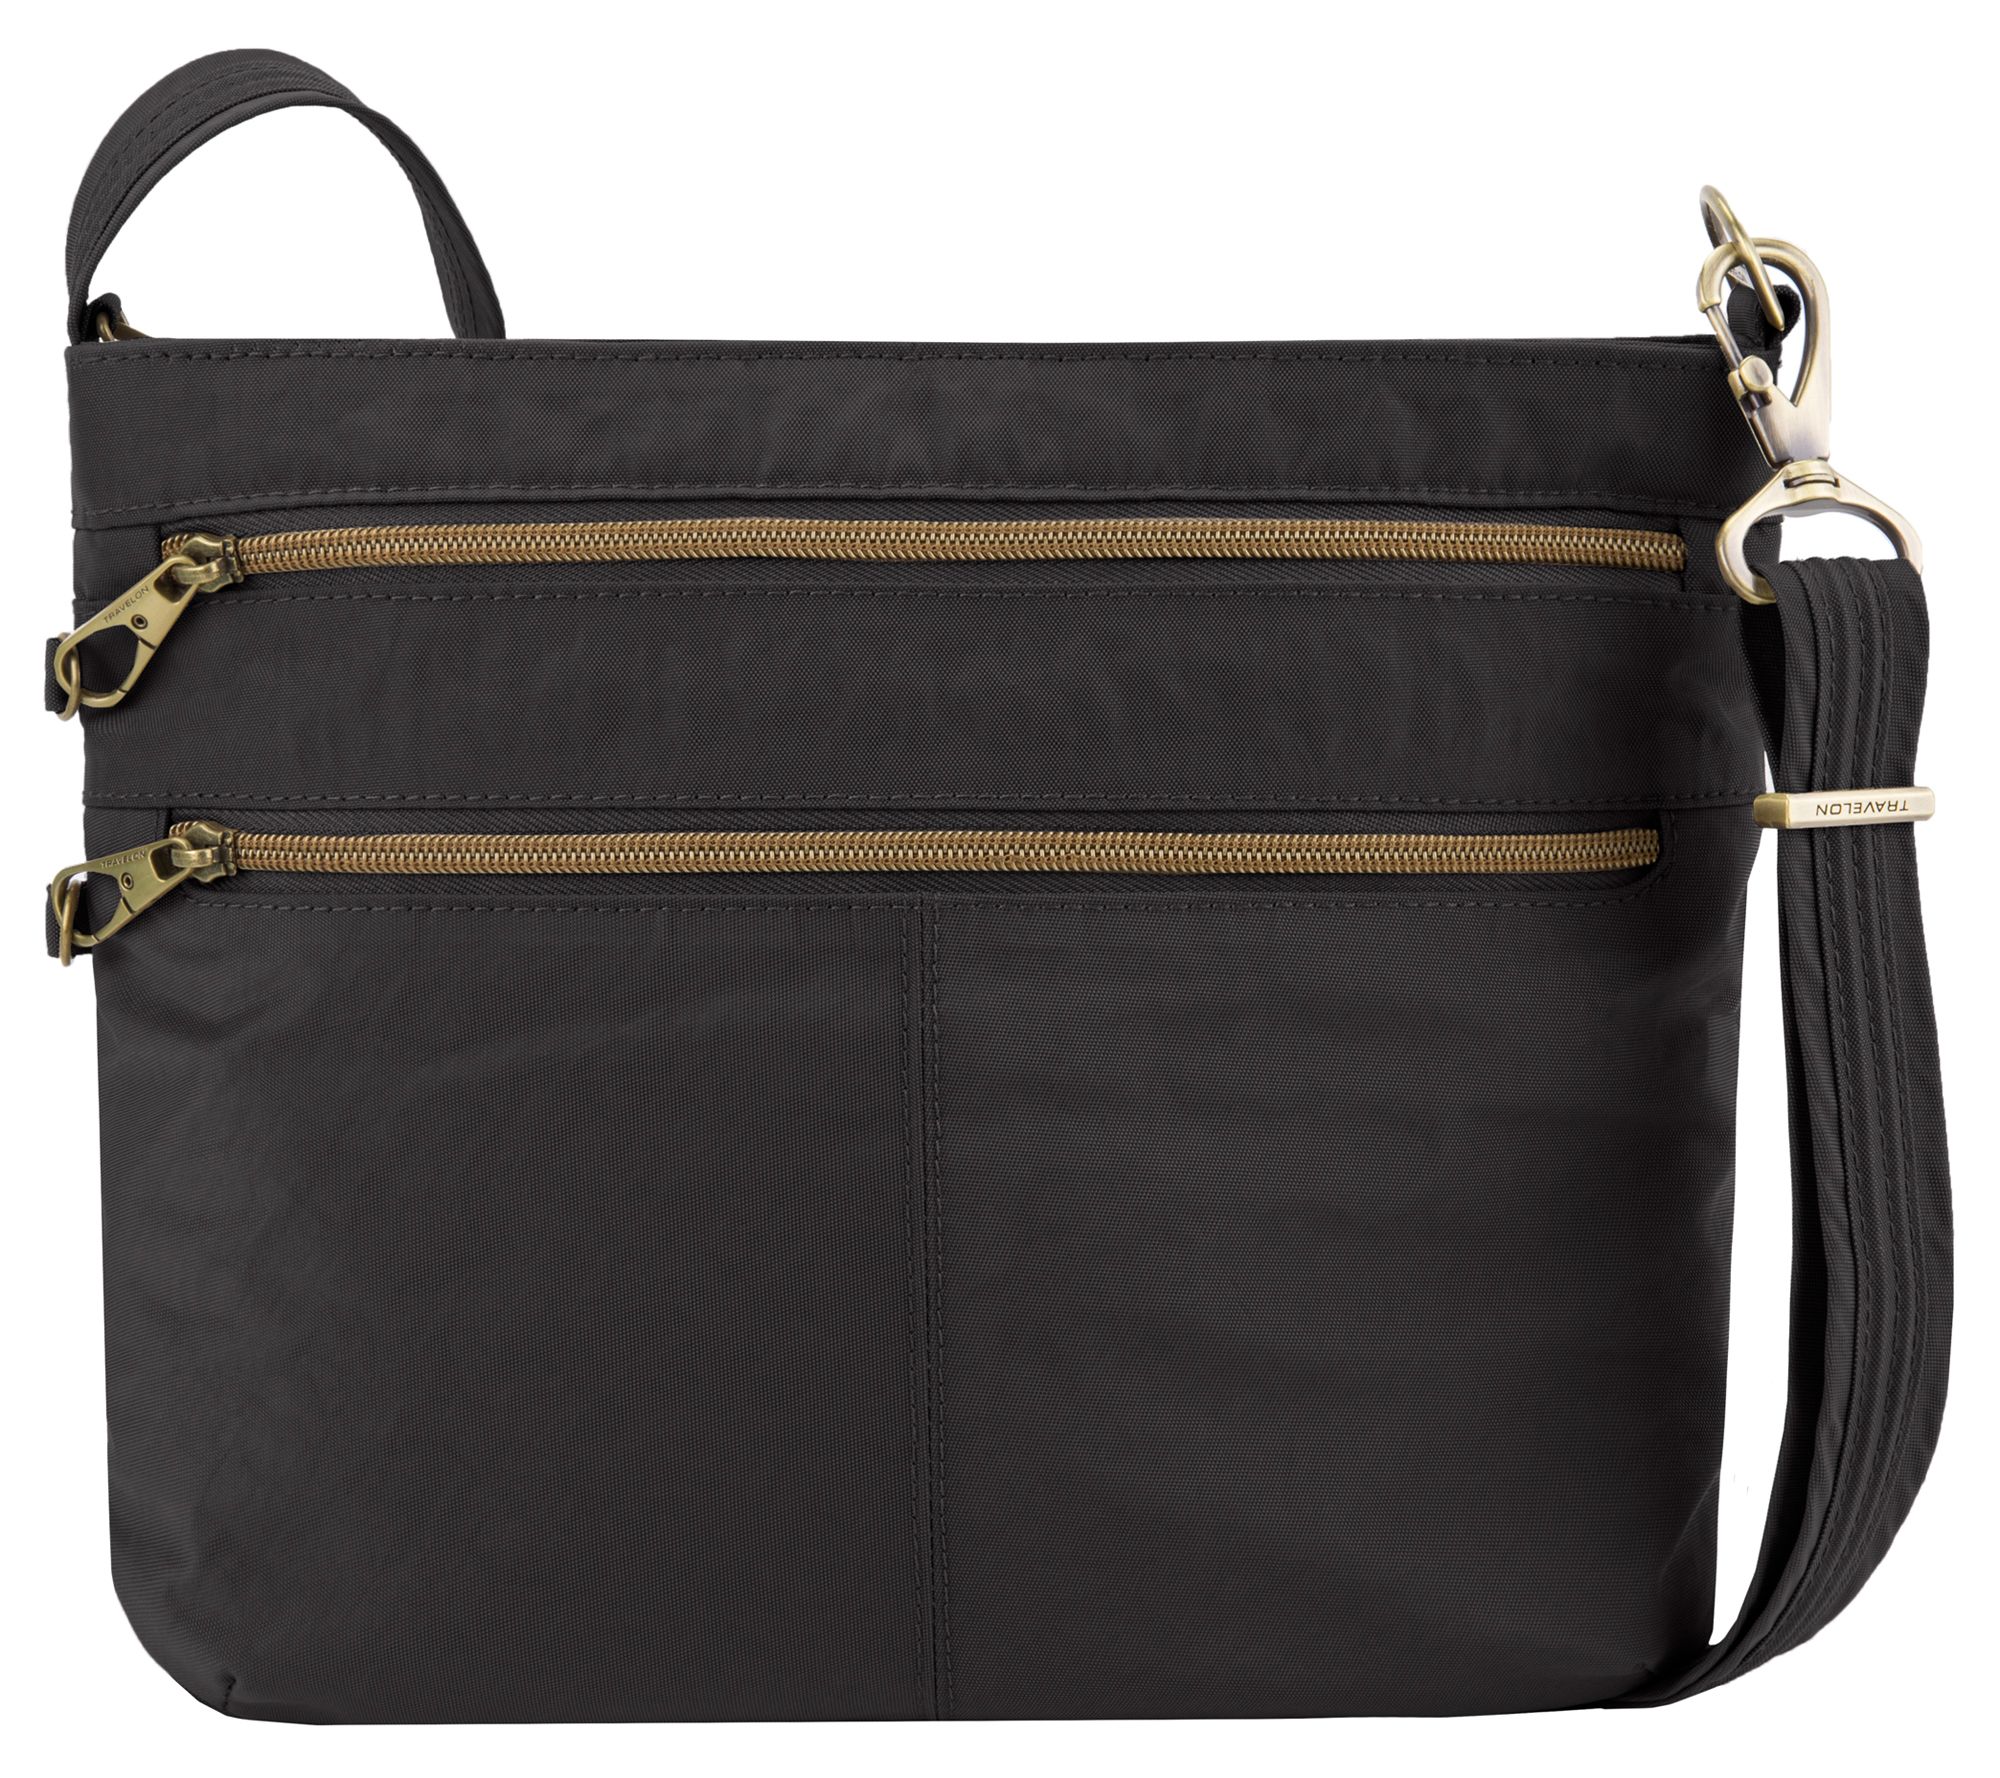 zip bag for travel